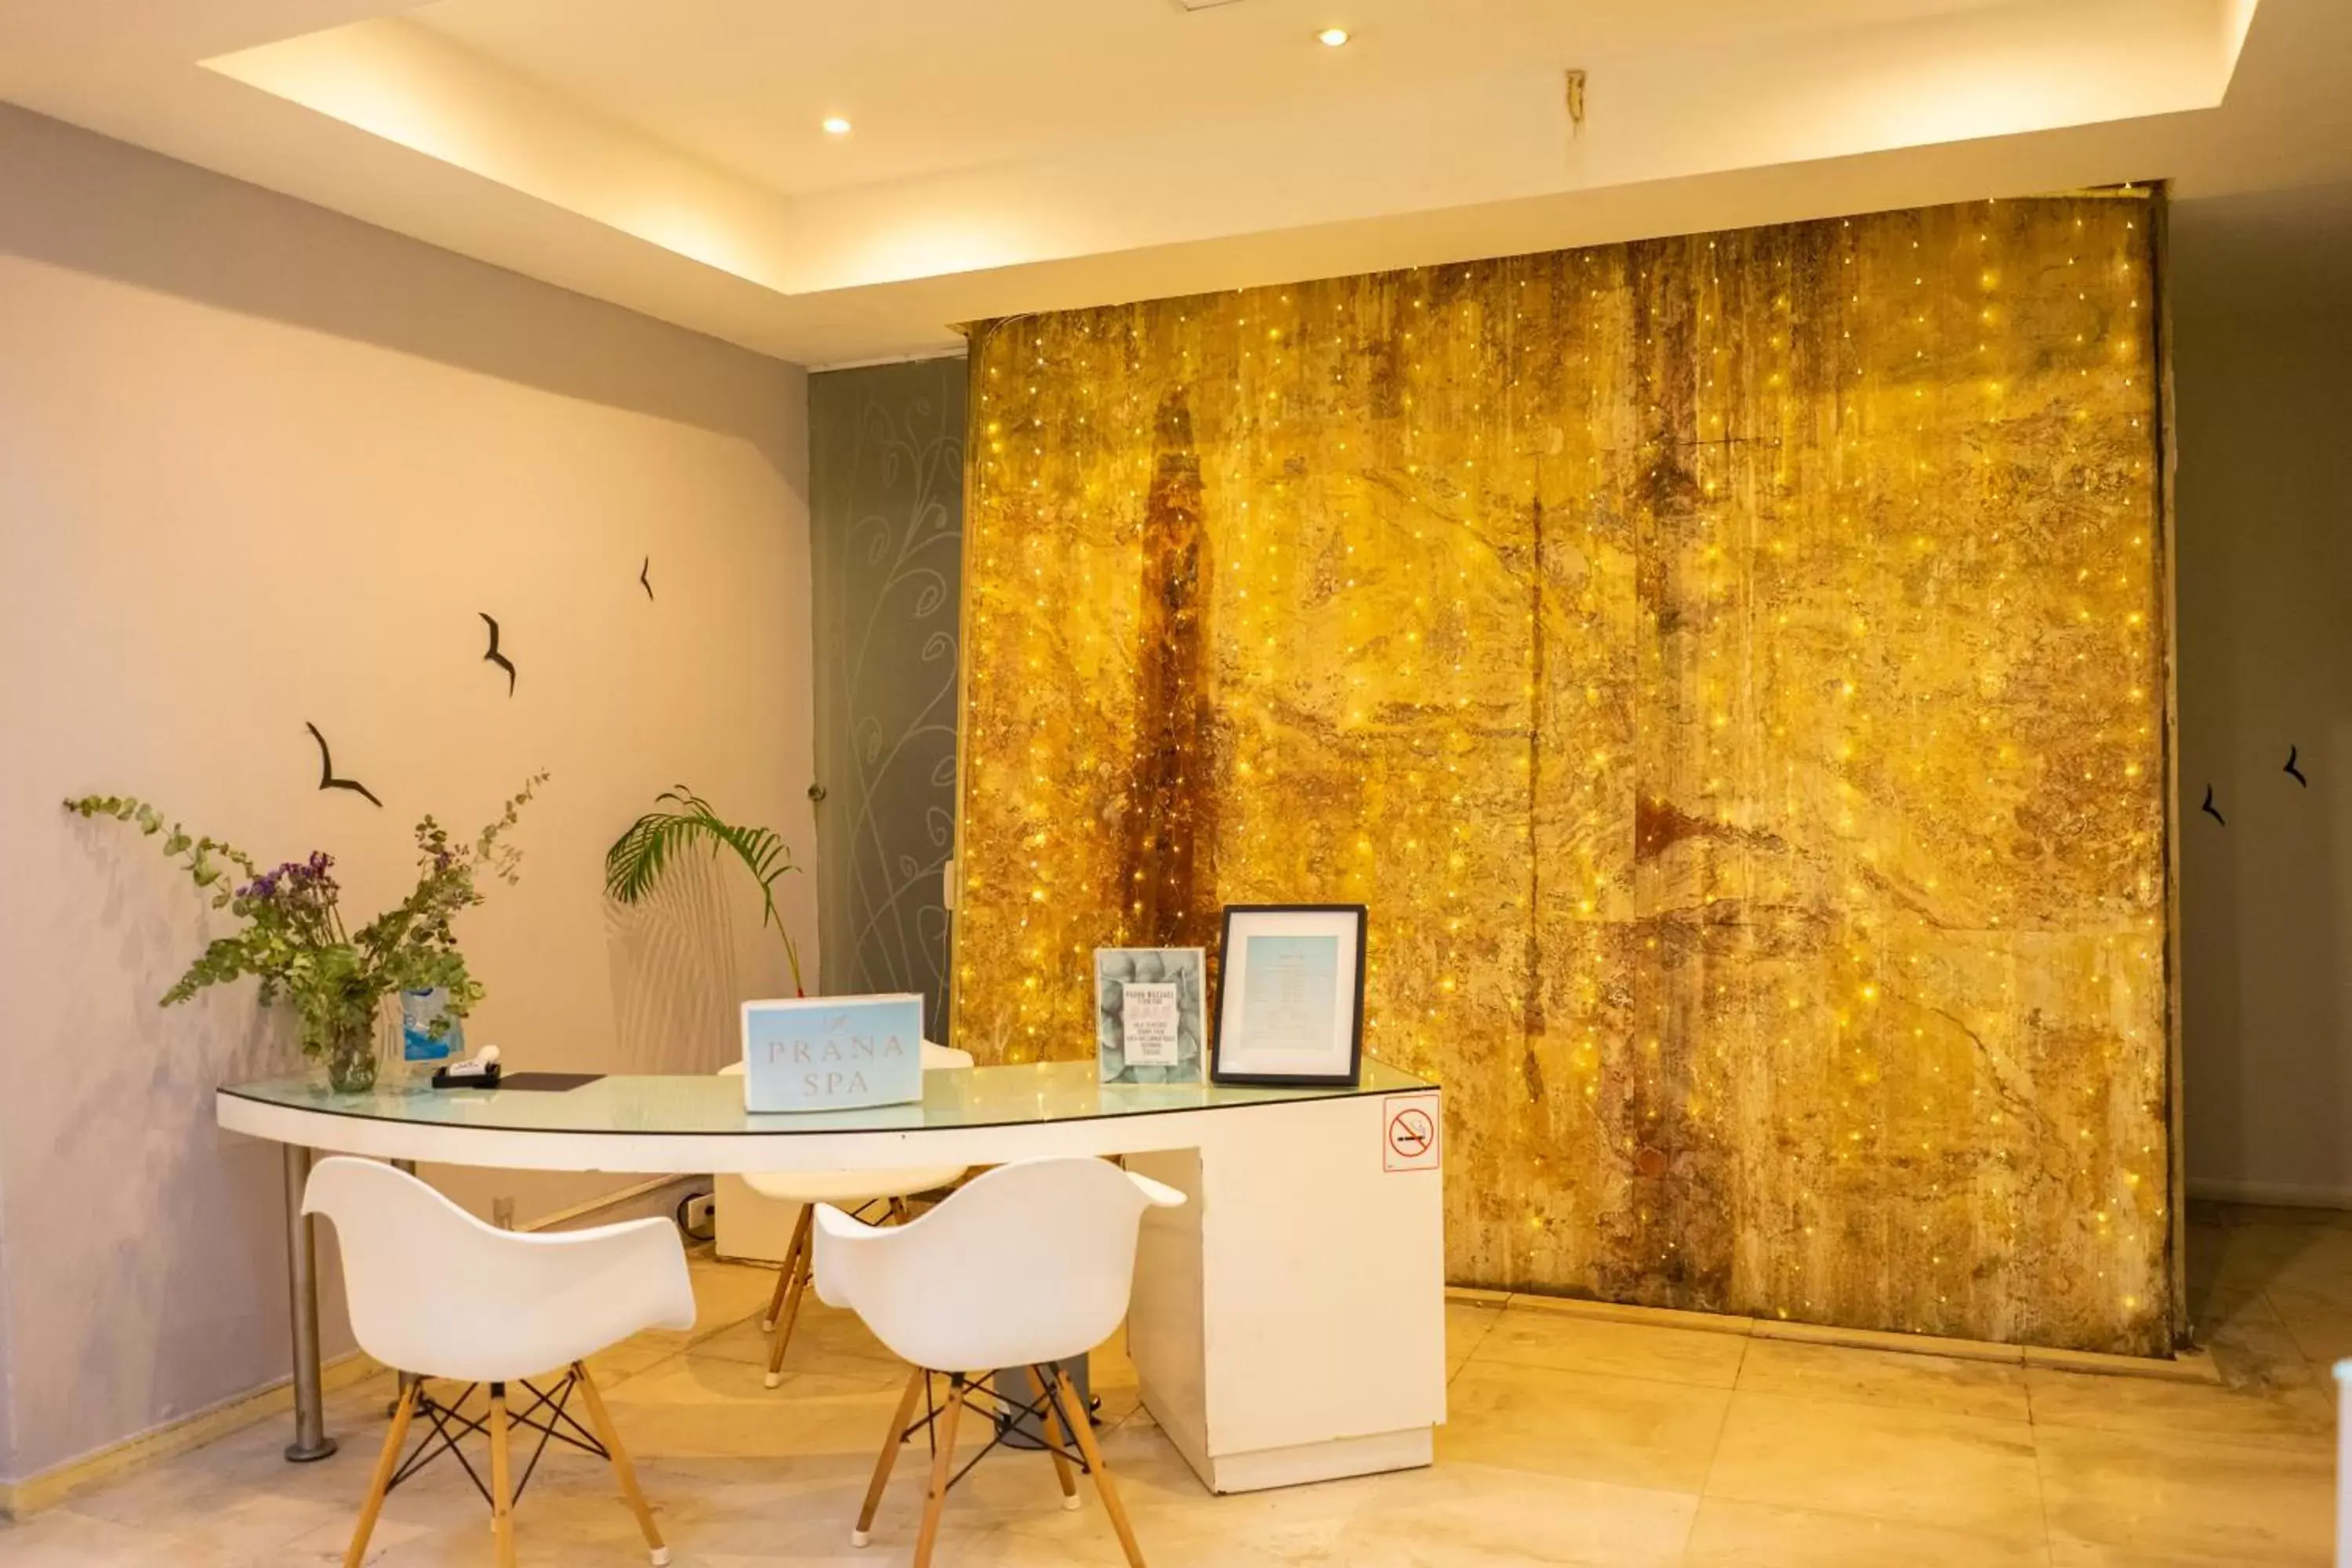 Lobby or reception in In Fashion Hotel & Spa